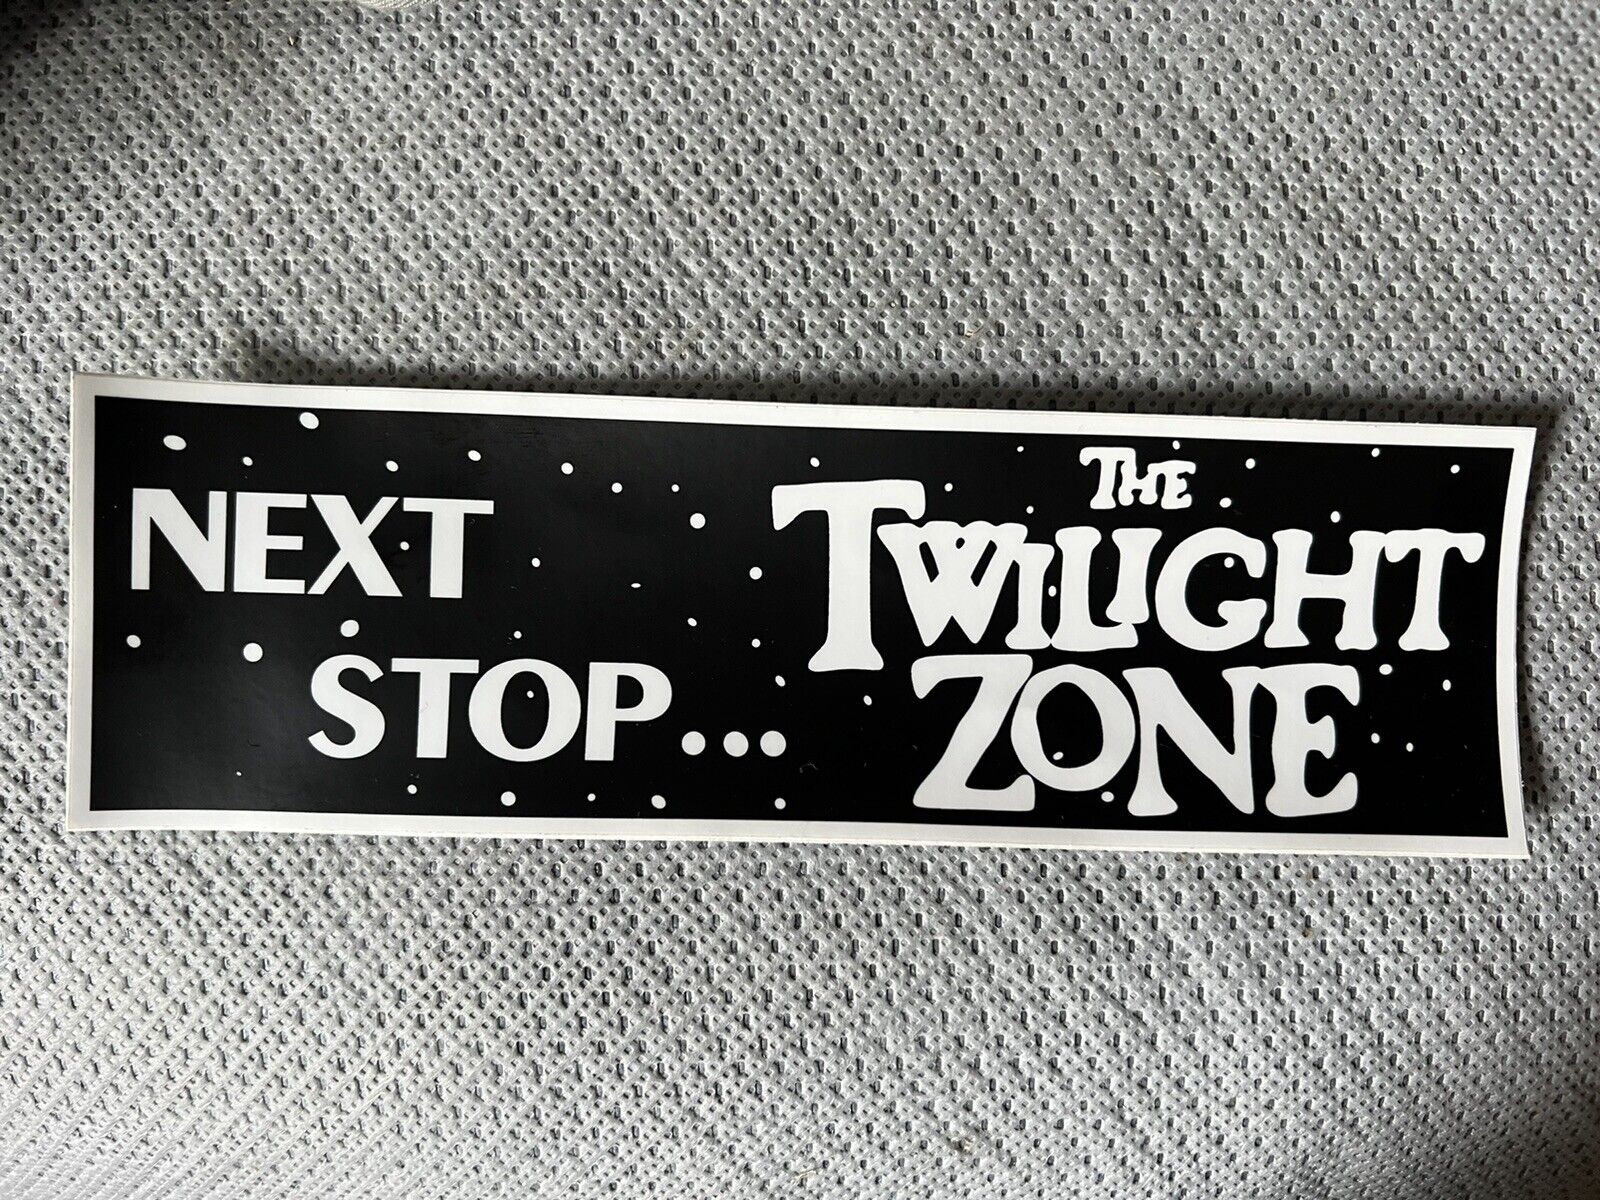 Twilight Zone Bumper Sticker 1980's Vintage Auto Car Tv Next Stop New!